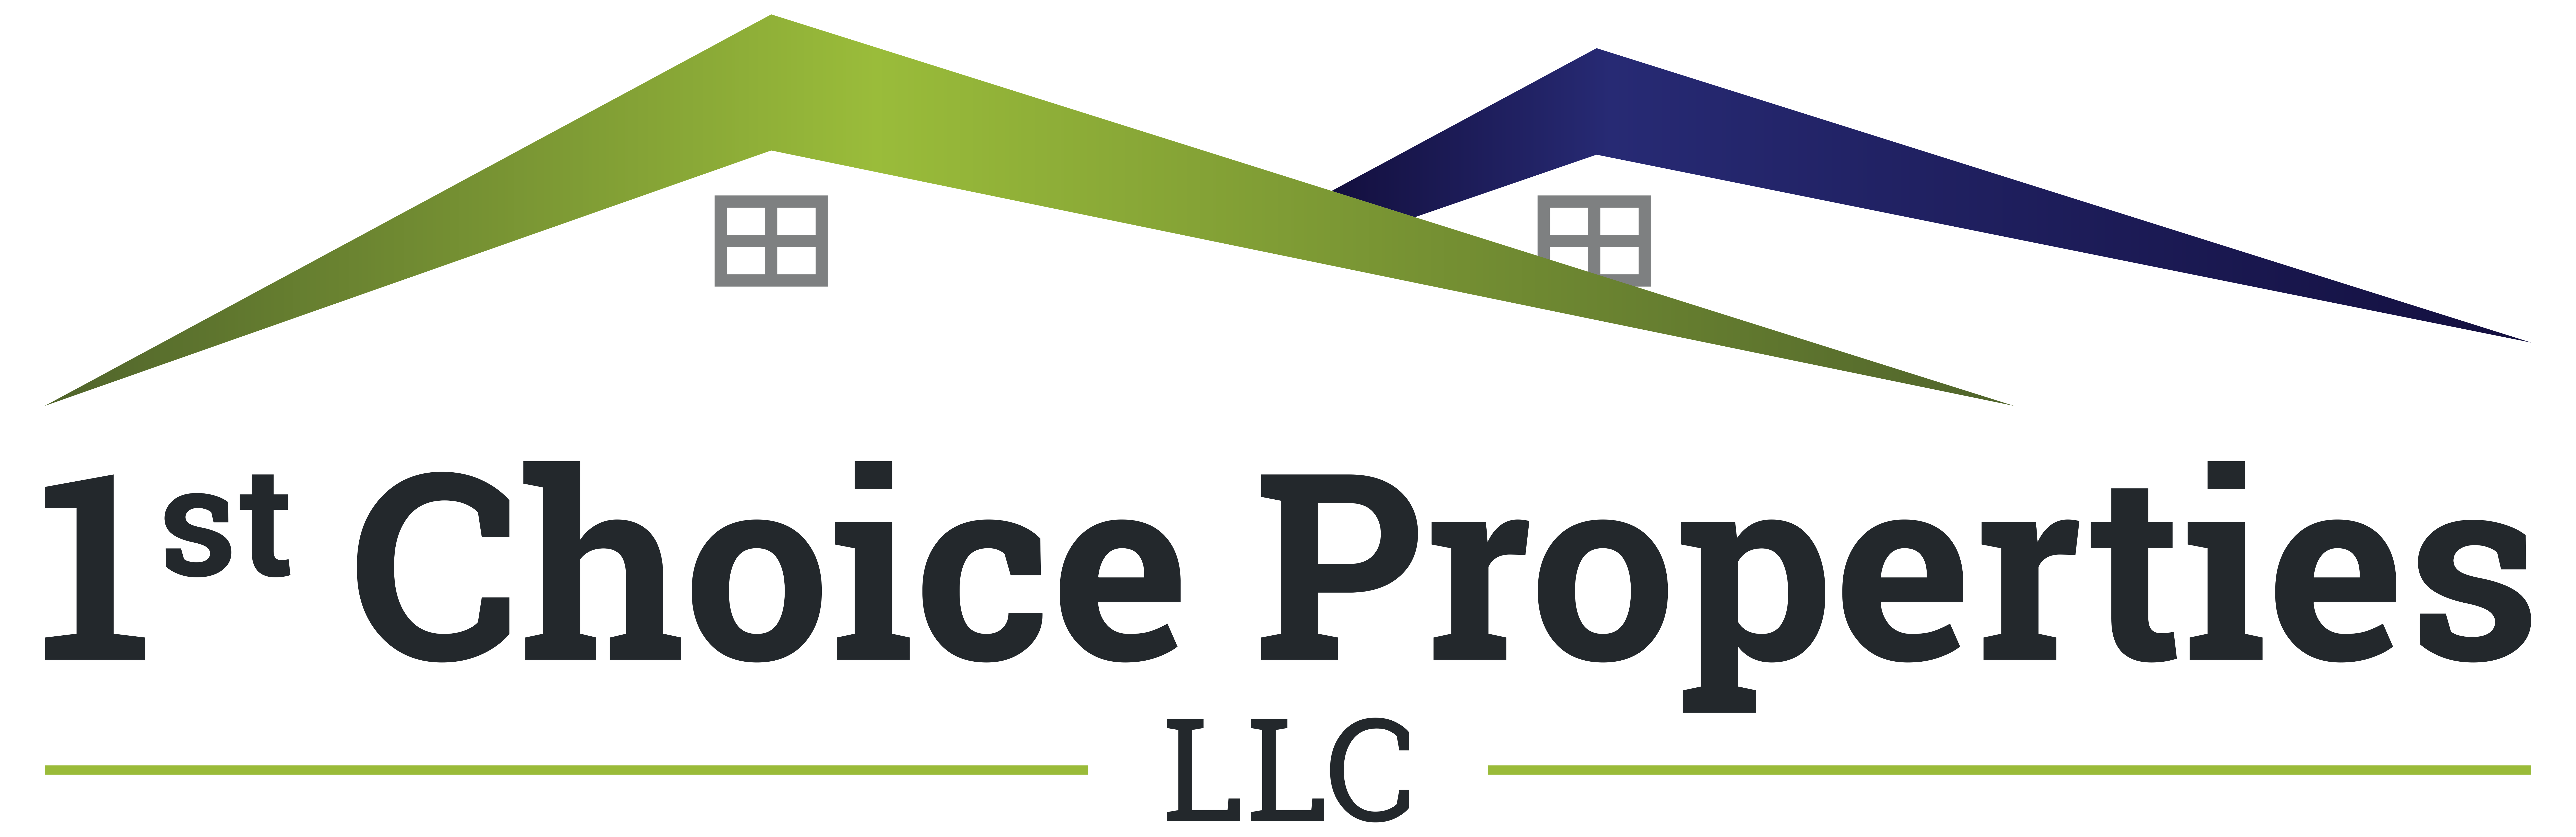 1st Choice Properties, LLC